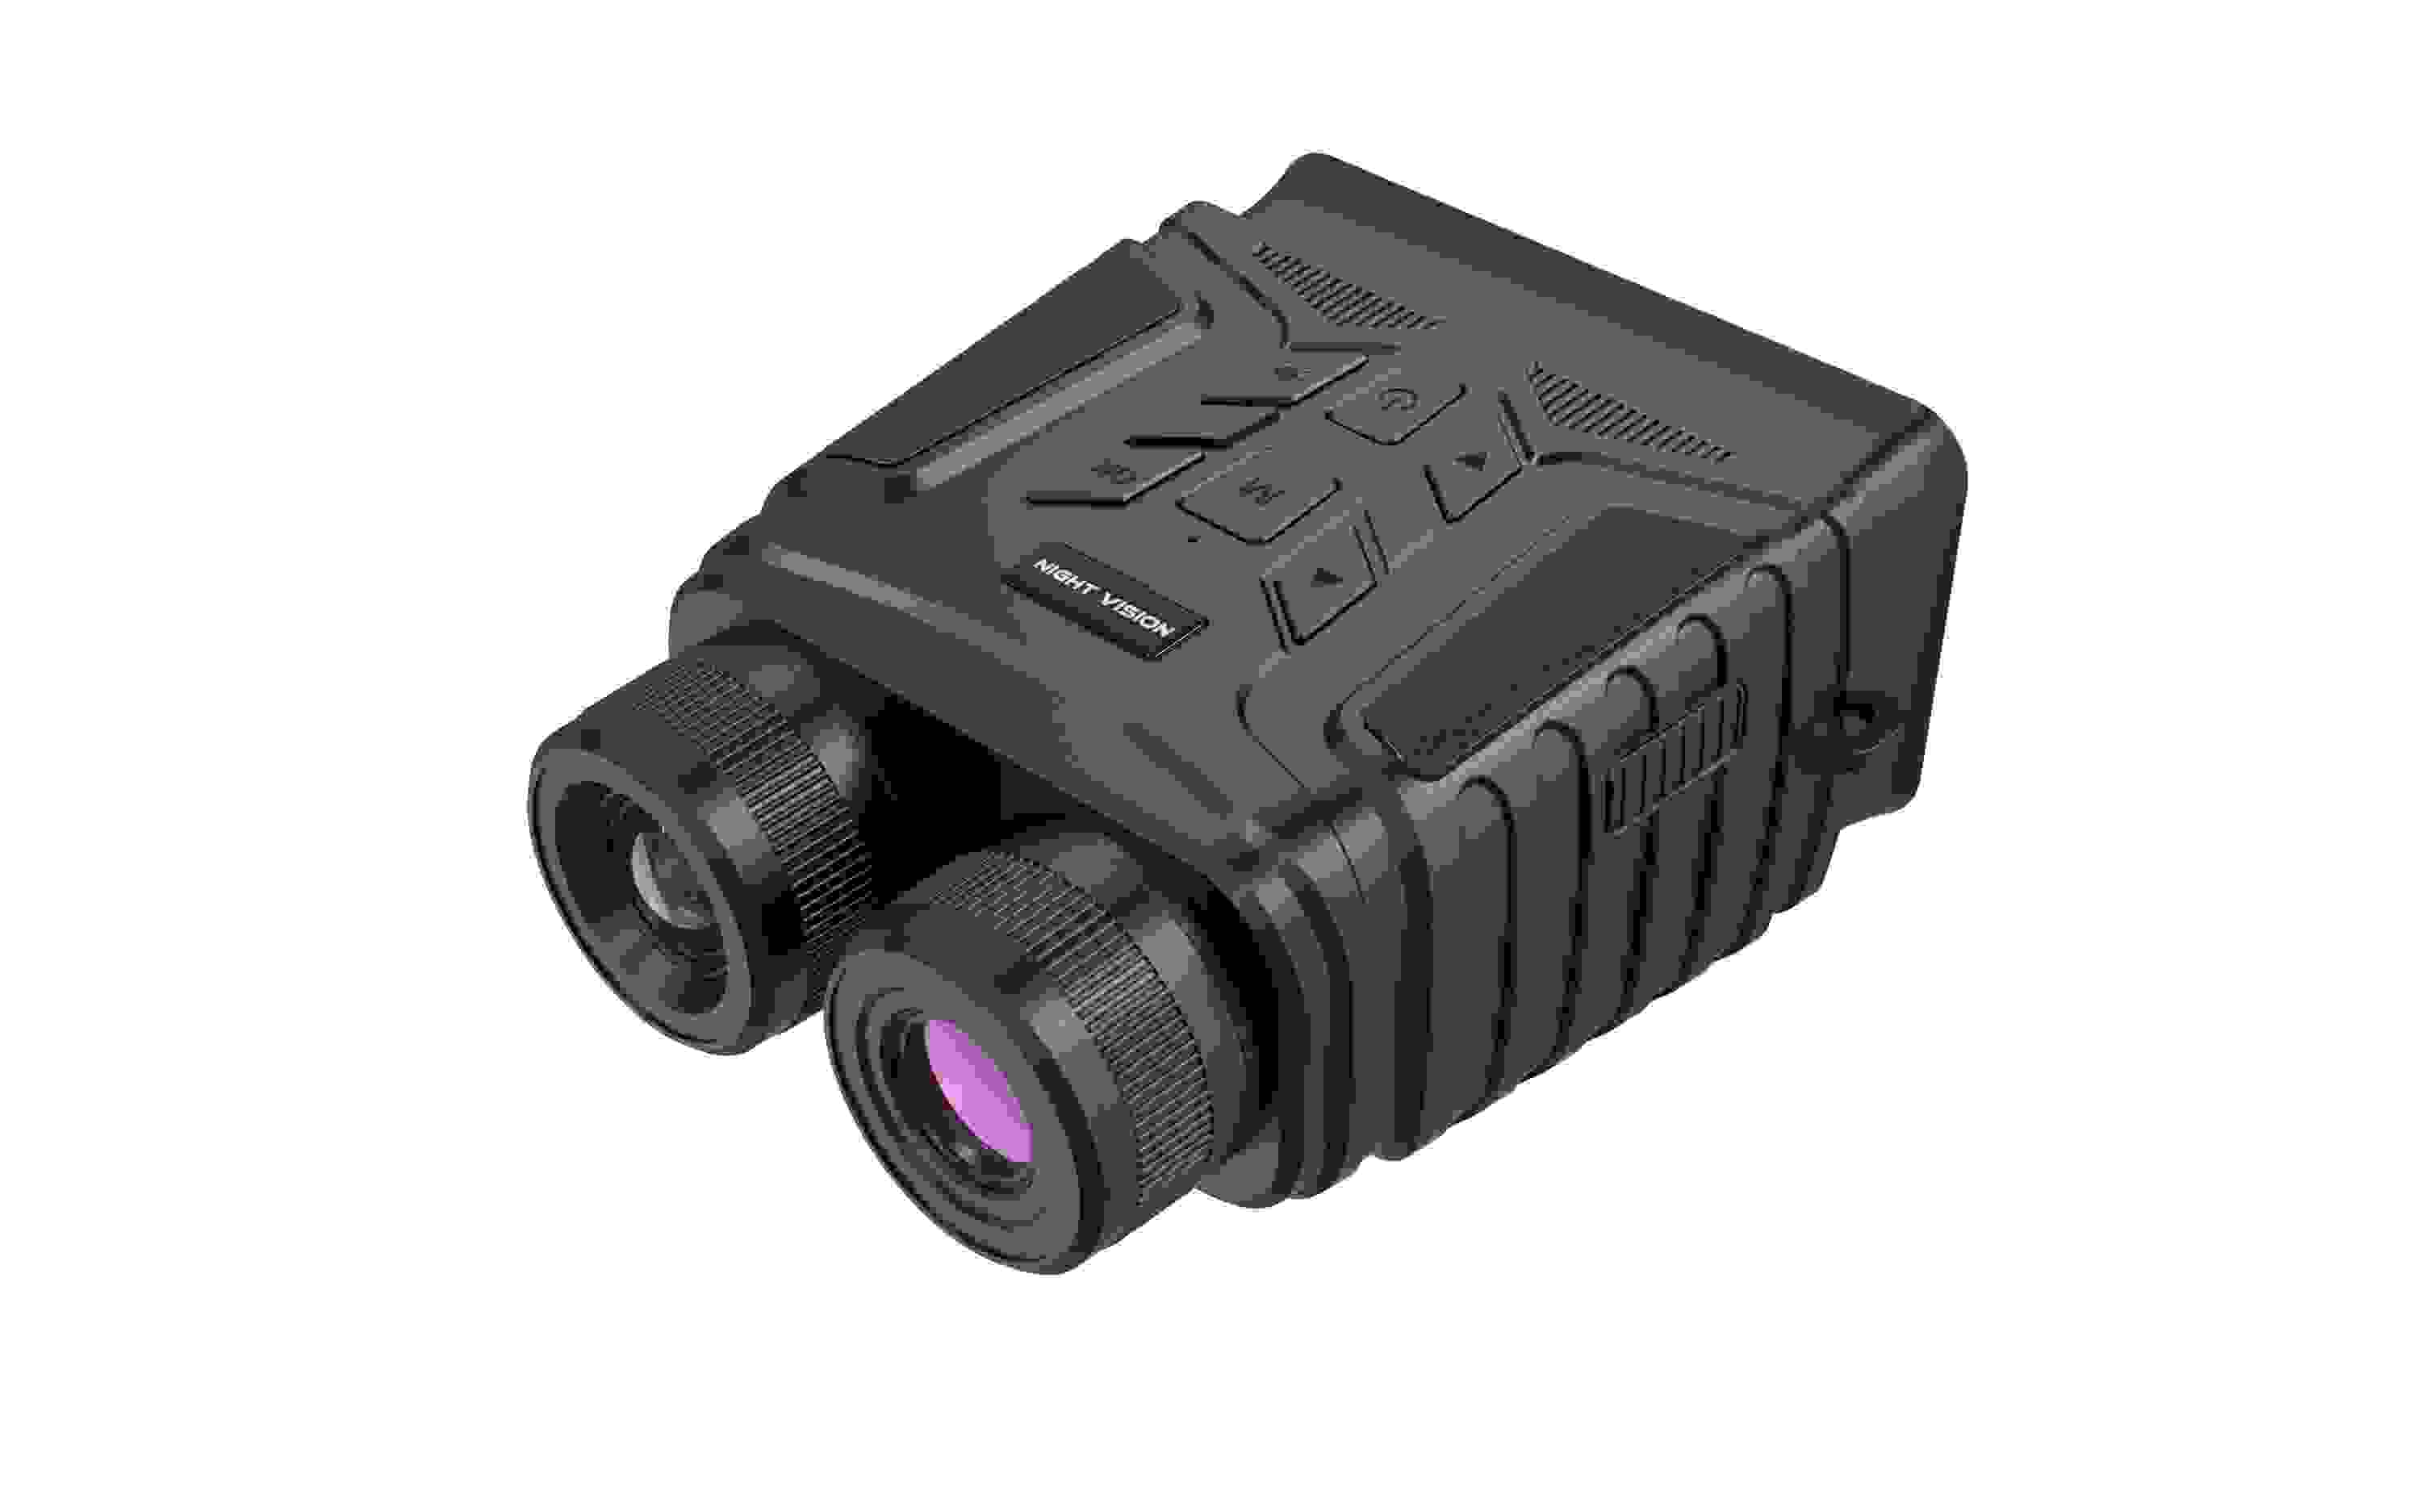 8x Digital Zoom Camping Hunting Night Vision Goggles Binoculars Camera